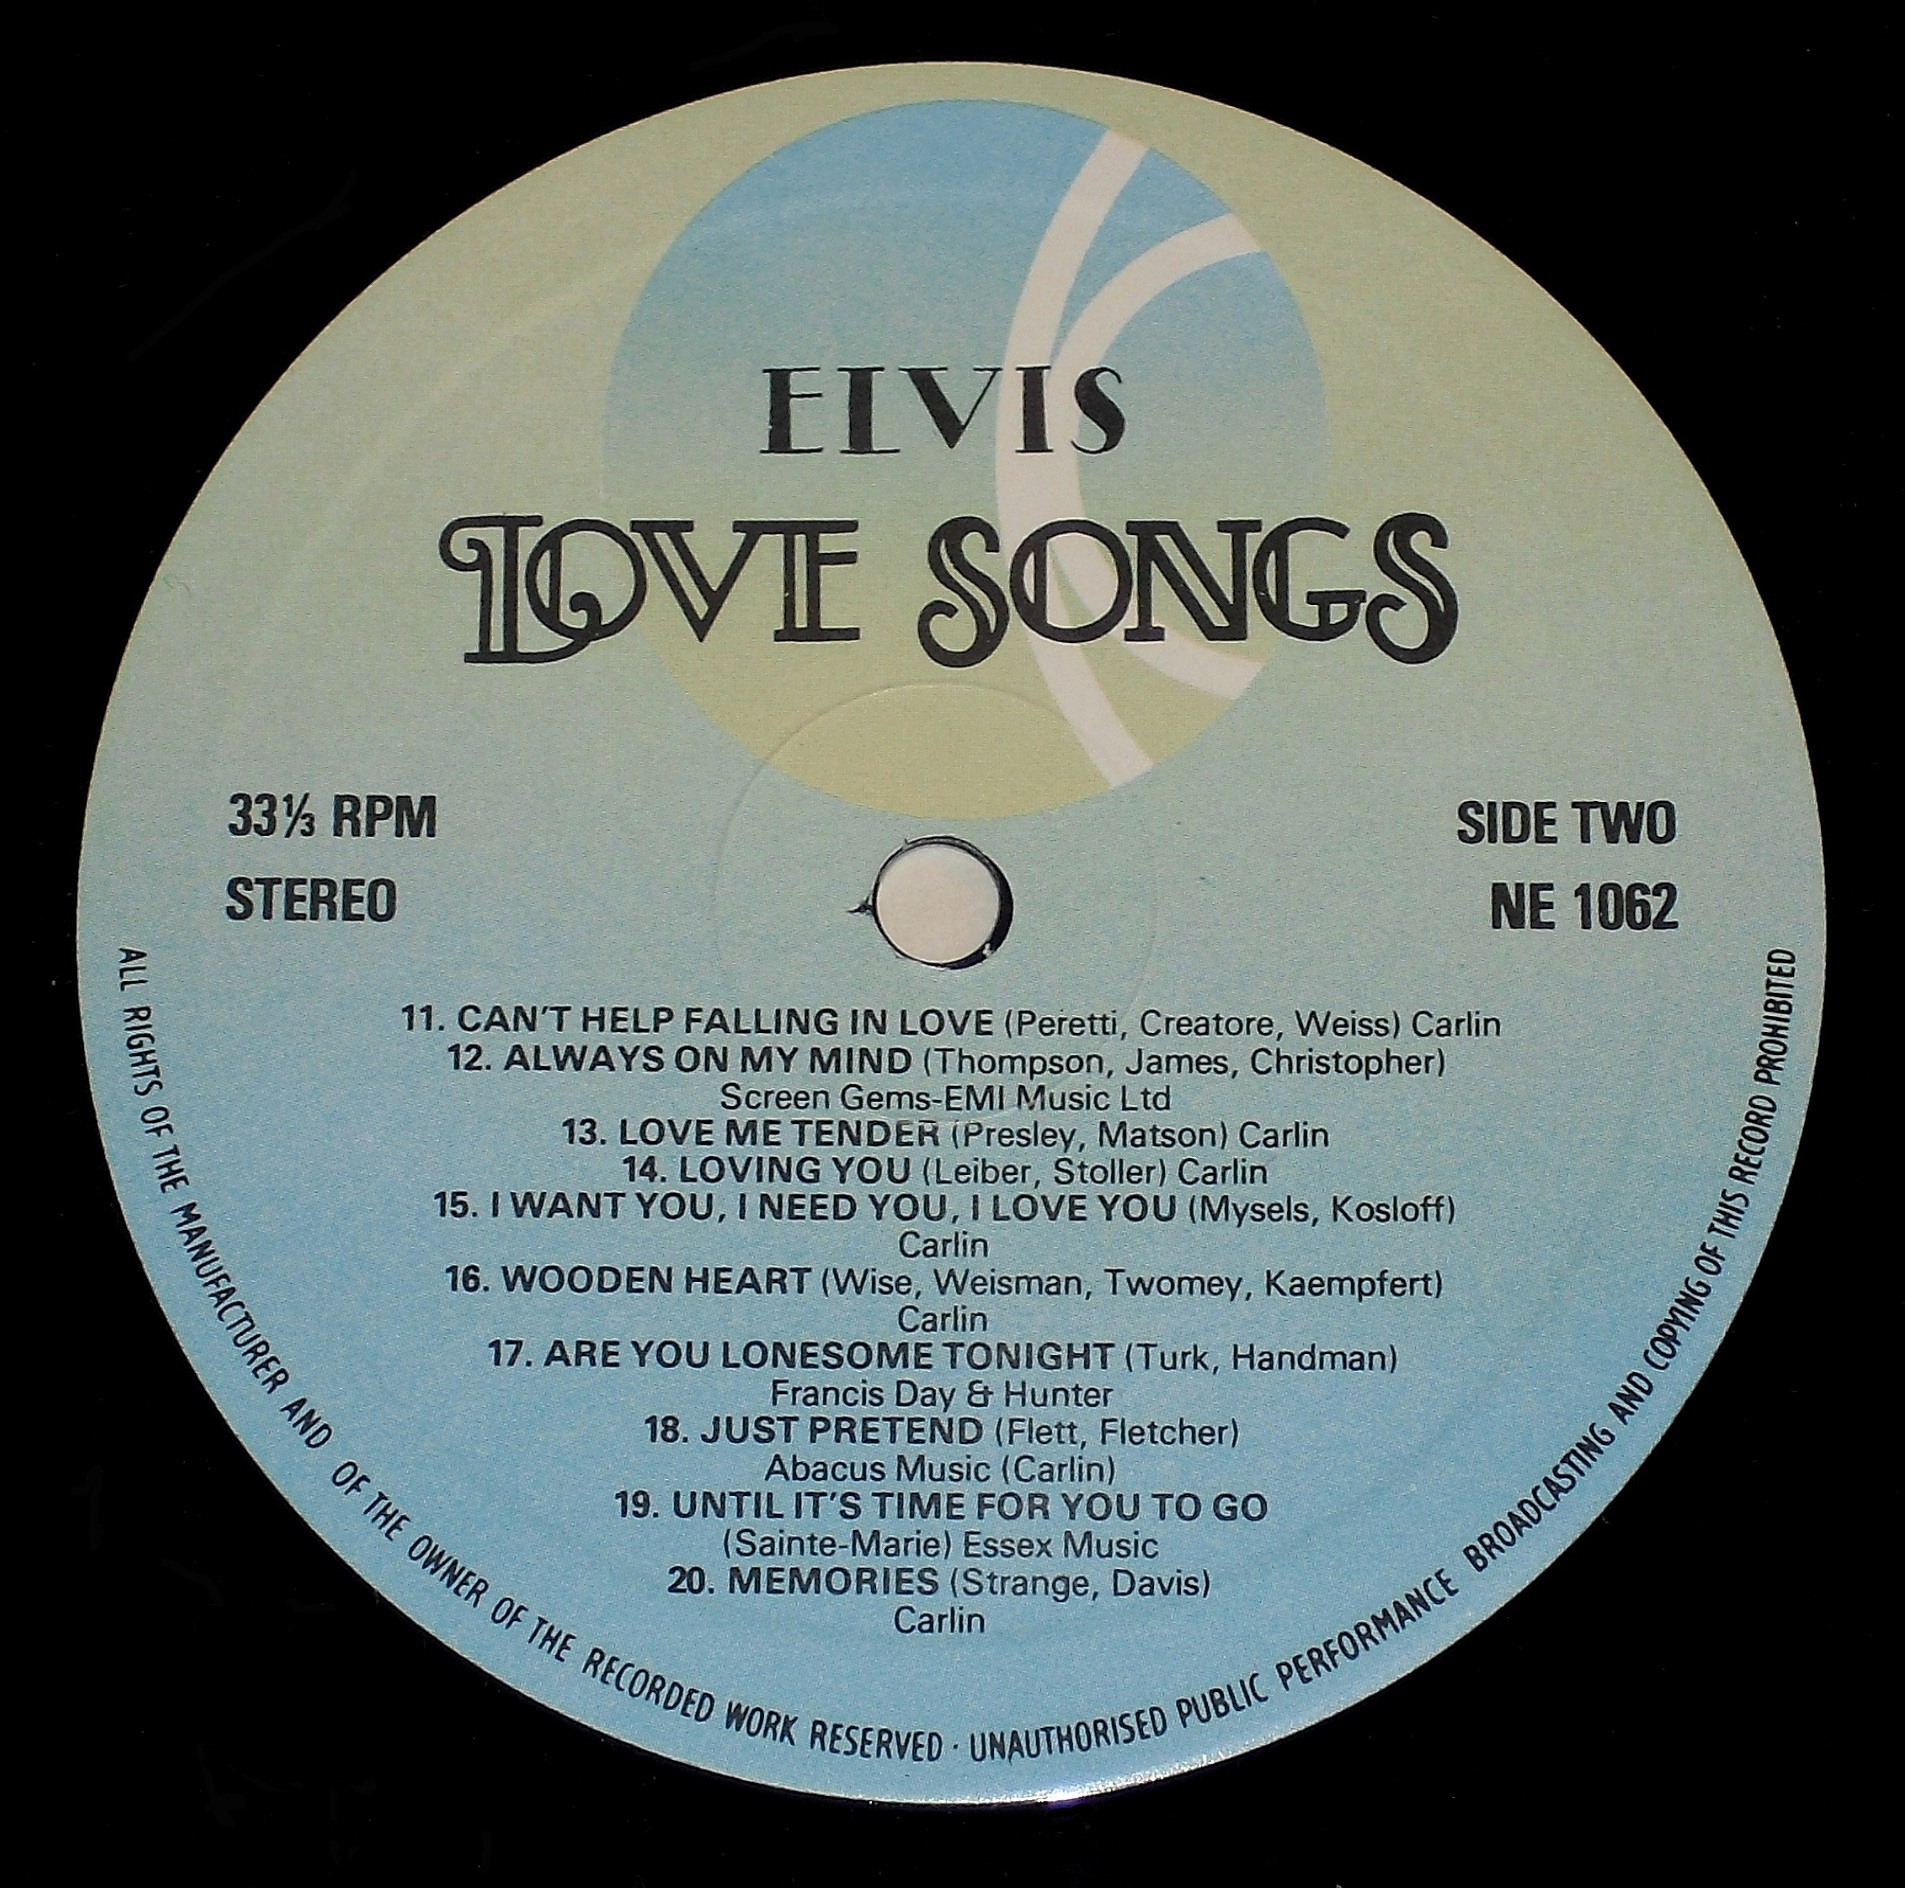 UK - ELVIS LOVE SONGS 03s2x5clw